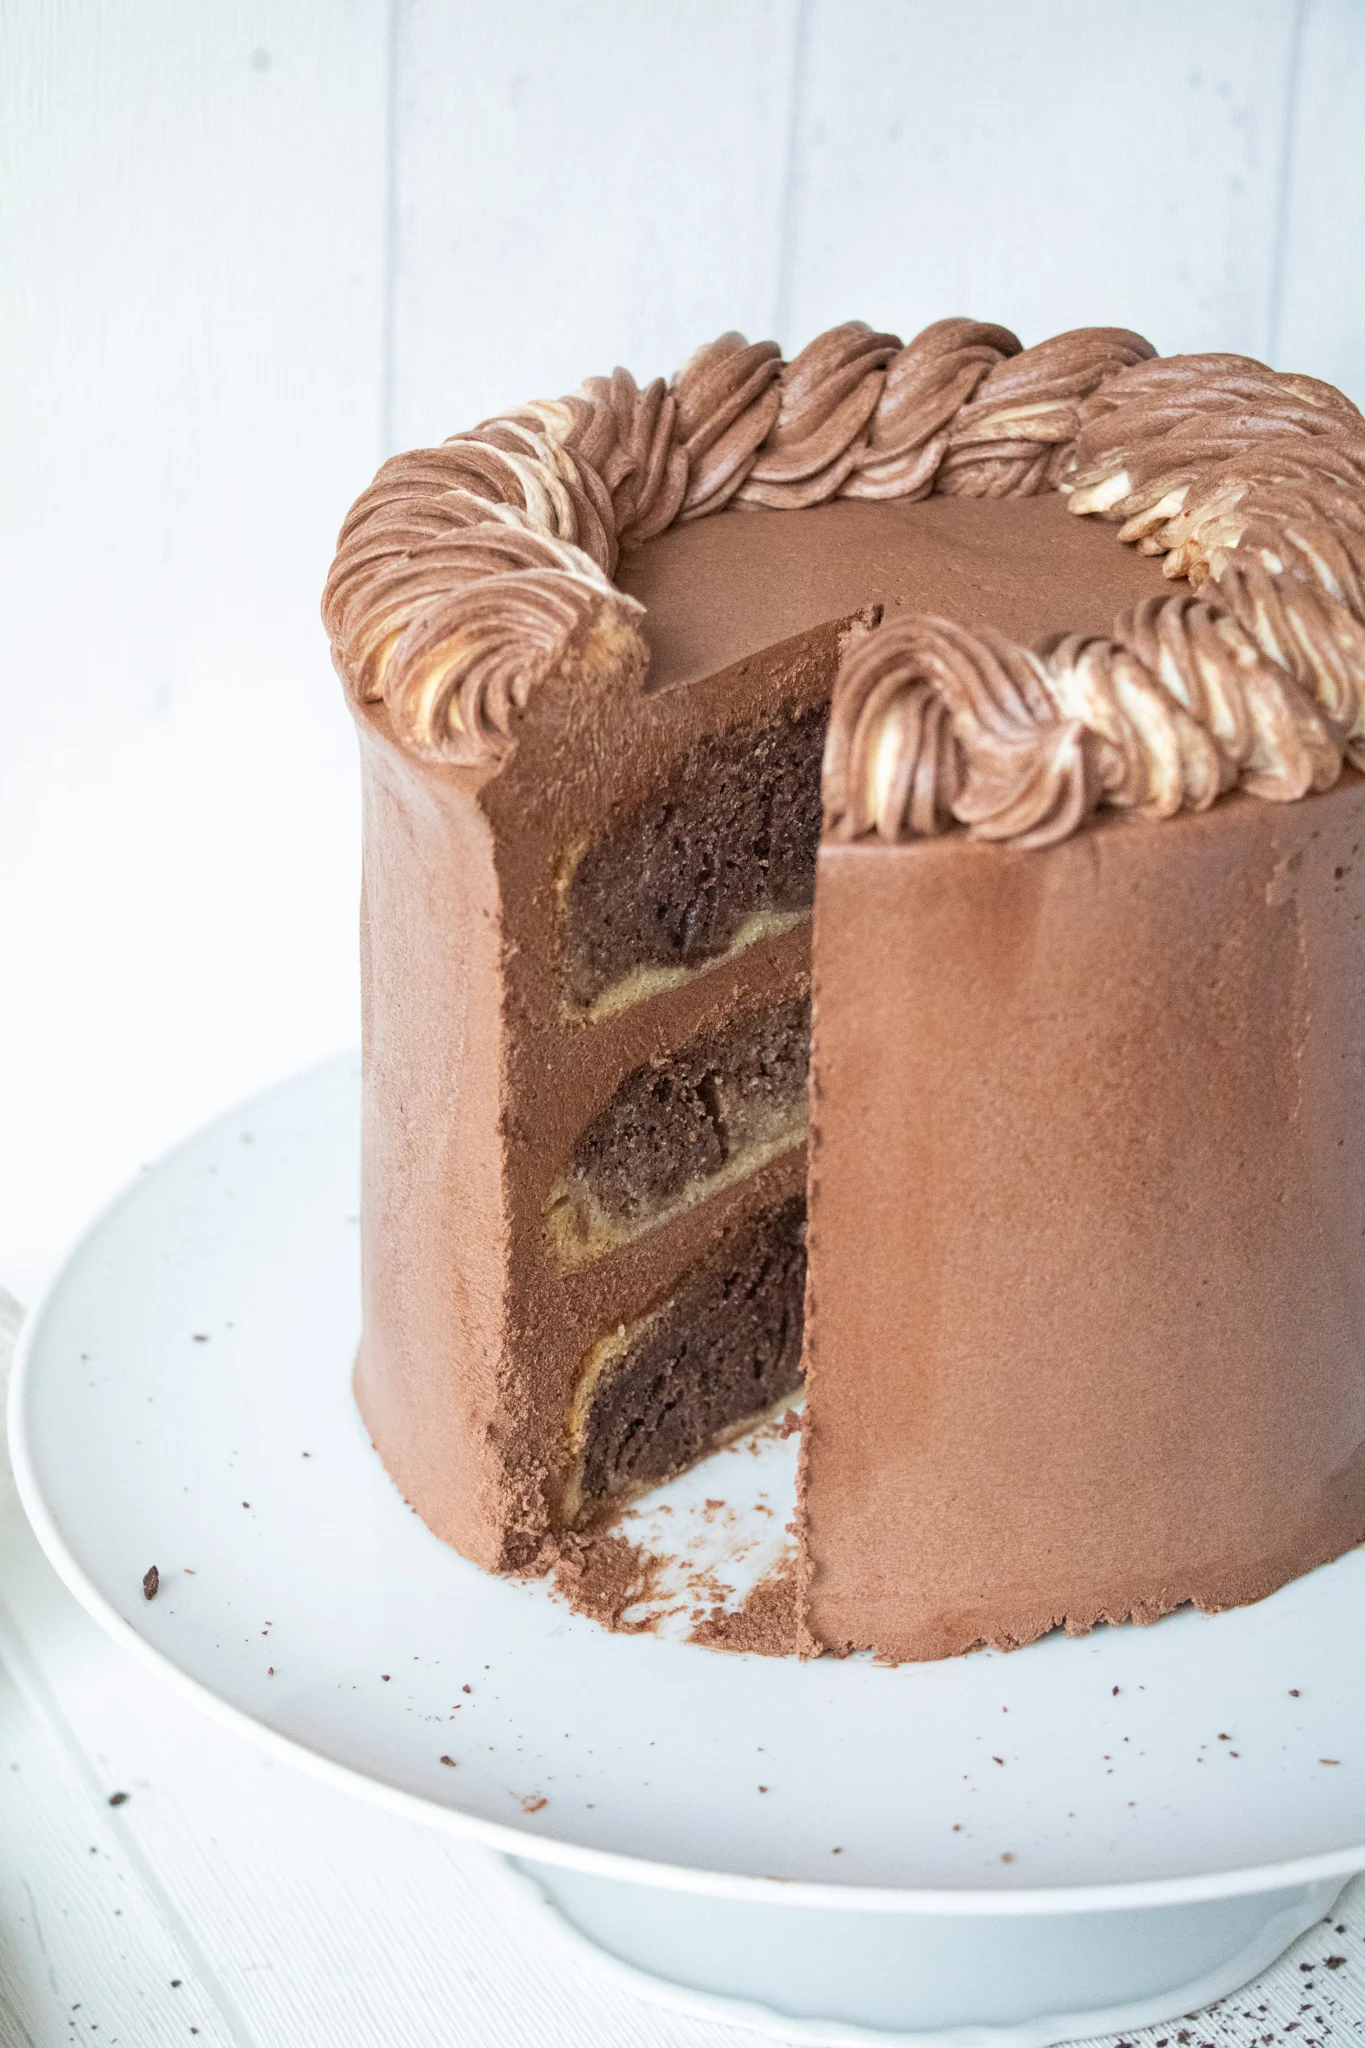 Moist-chocolate-cake-homemade-coucoucake10